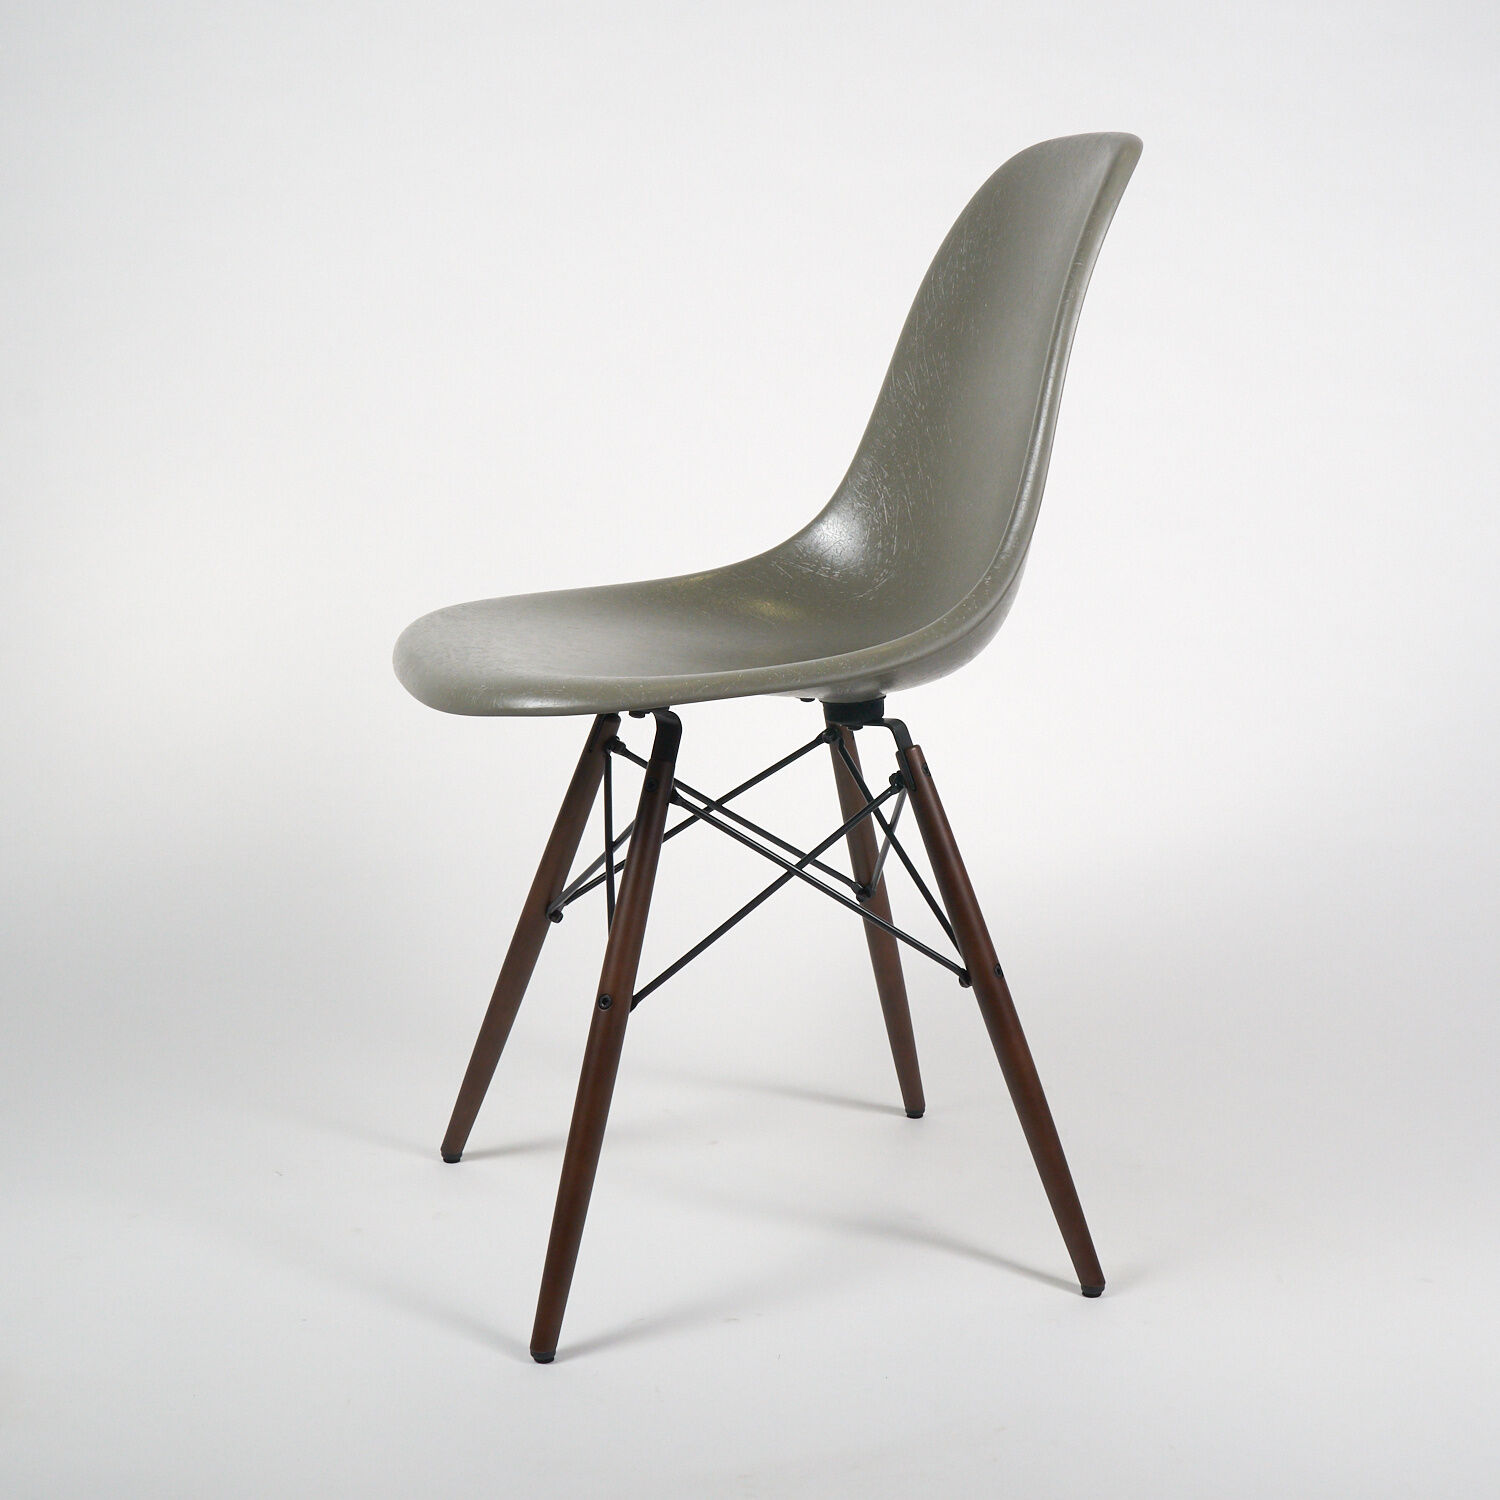 vitra-stuhl-eames-fiberglass-side-chair-dsw-raw-umber-grau-holzgestellt-ahorn-dunkel-mf-0004558-001-4